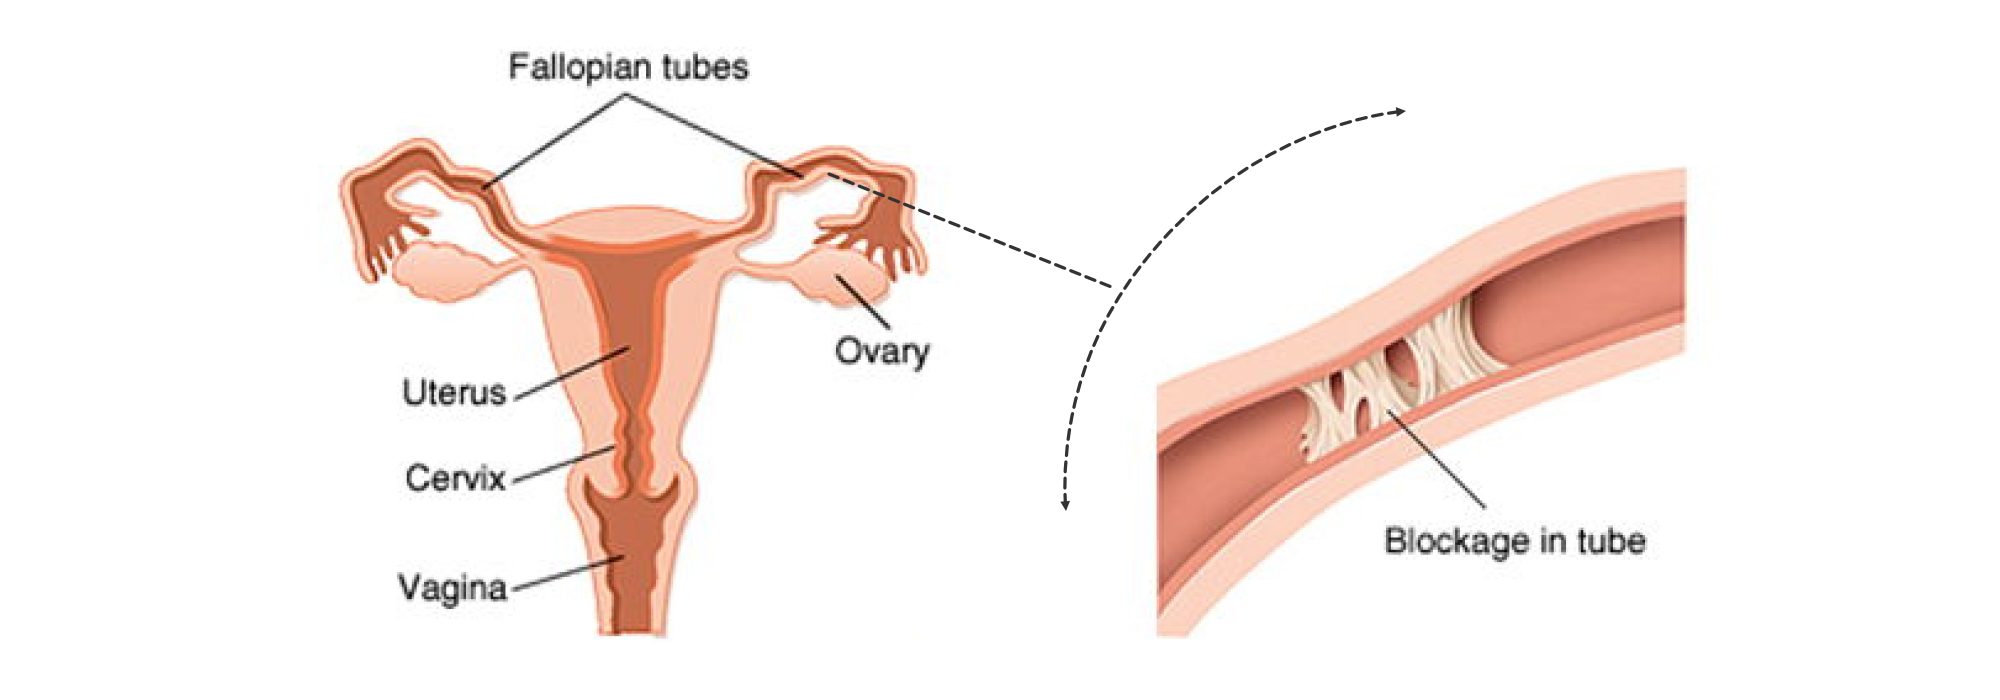 Natural treatment for fallopian (uterine) tube blockage